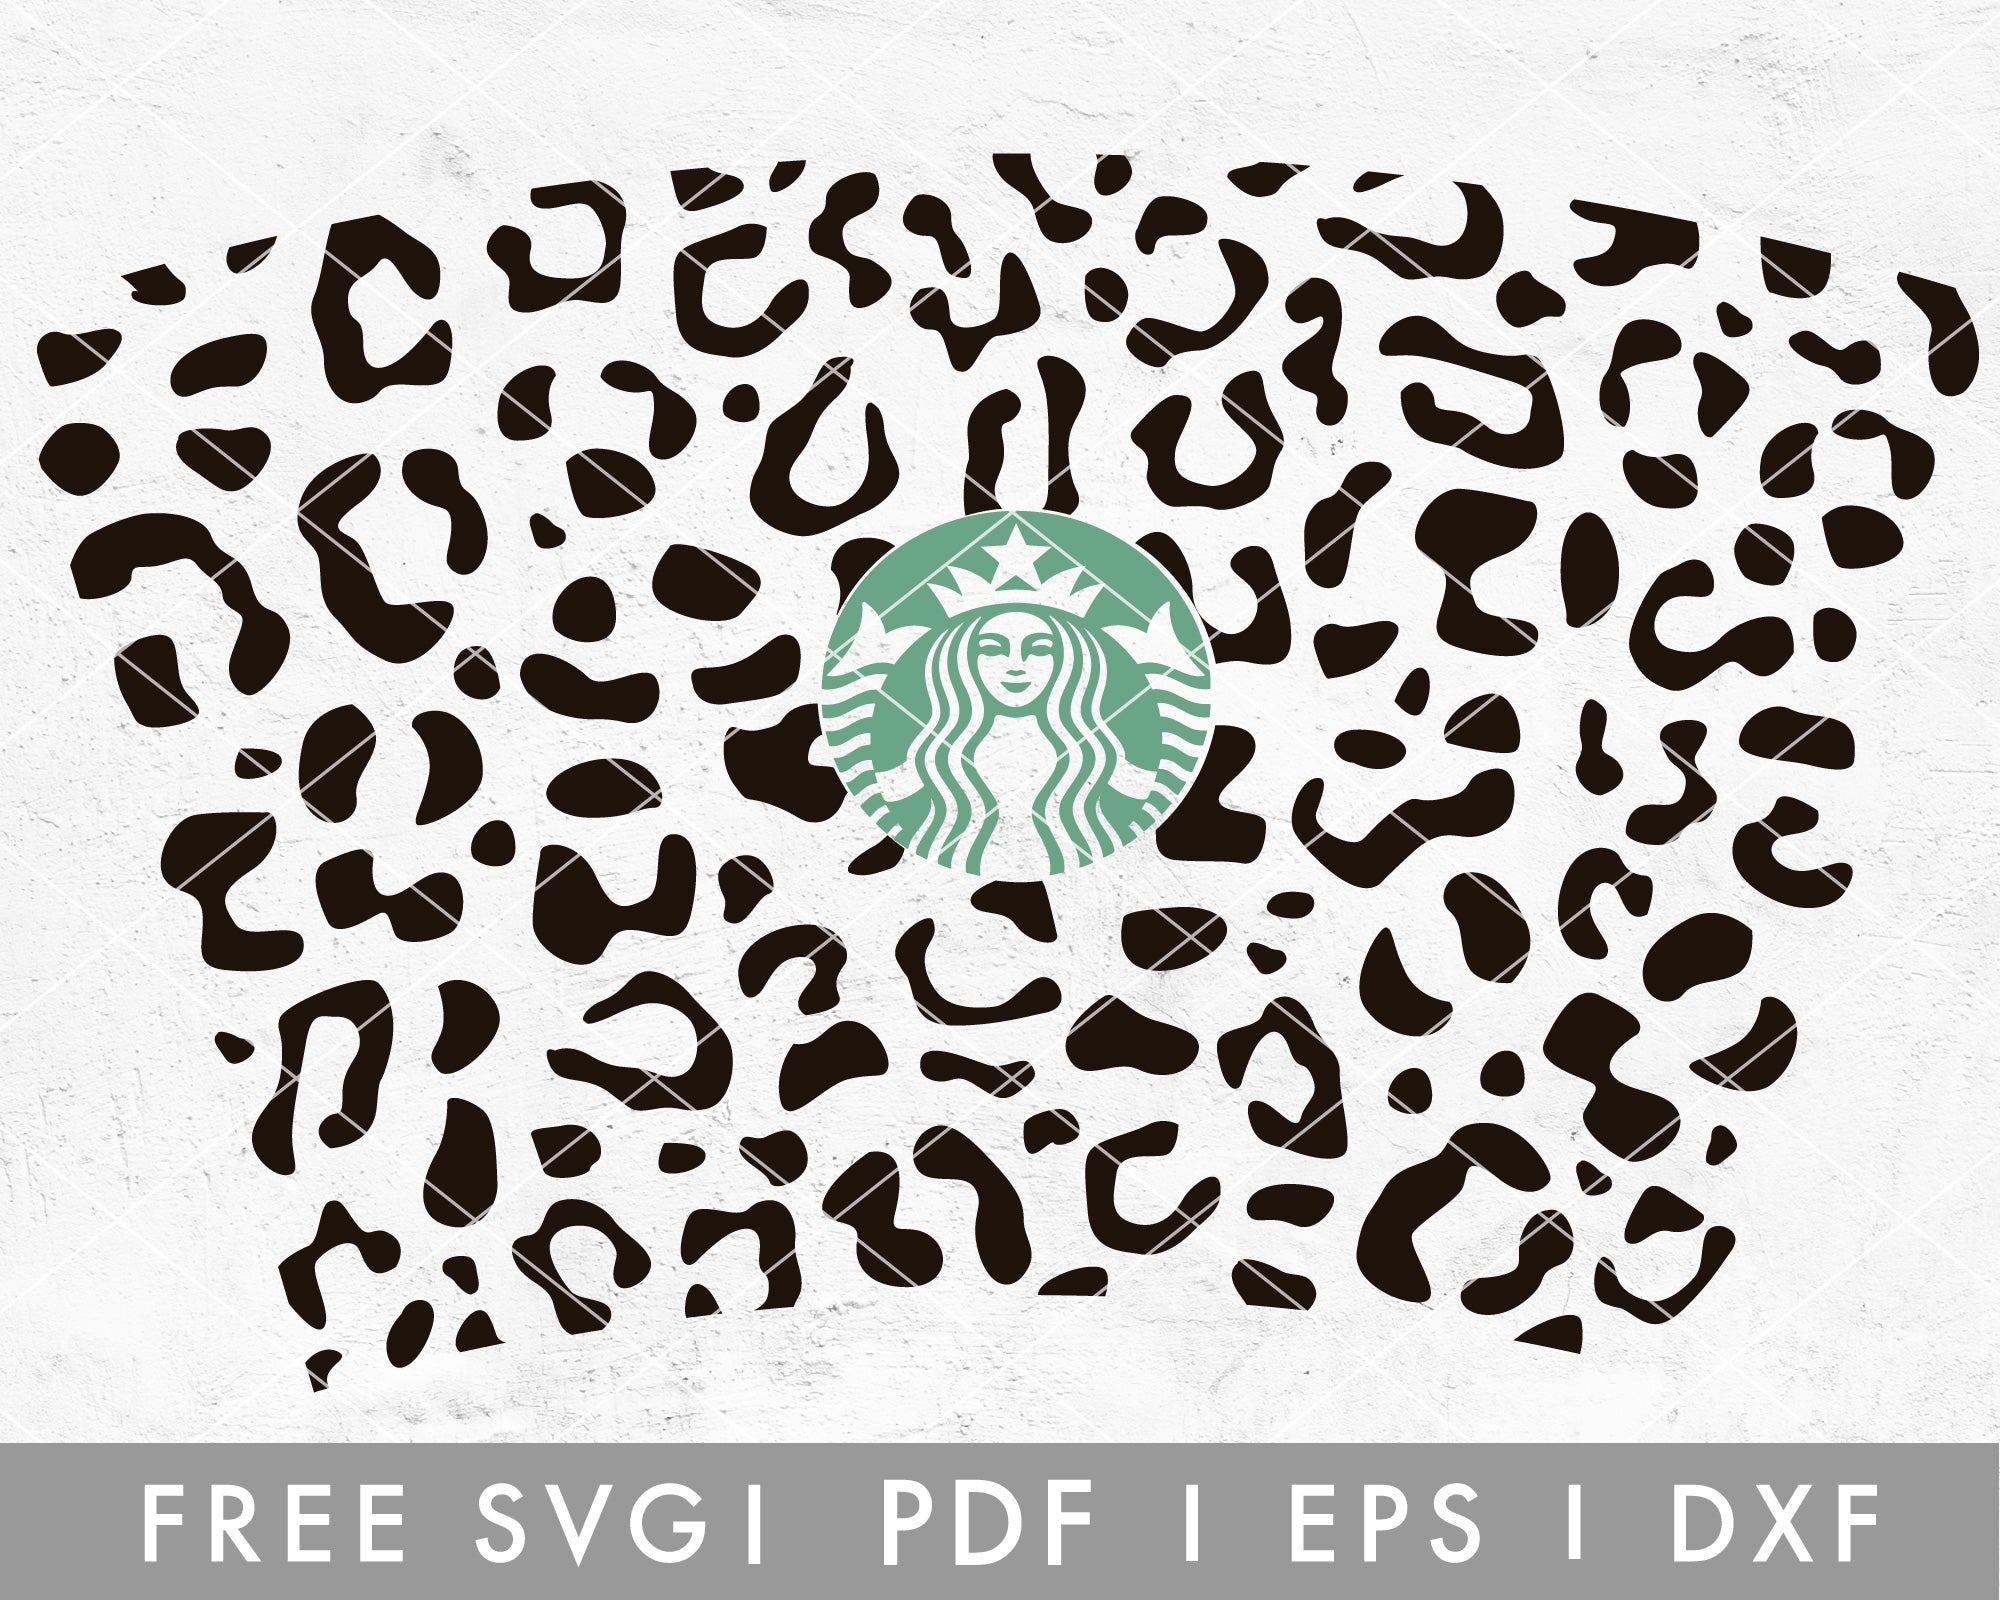 STRABUCKS BUTTERFLY, Starbucks wrap svg, Cold cup svg, Butterfly starbucks  cup svg,Starbucks cup decal butterfly,Cold cup svg,Cricut svg,Svg